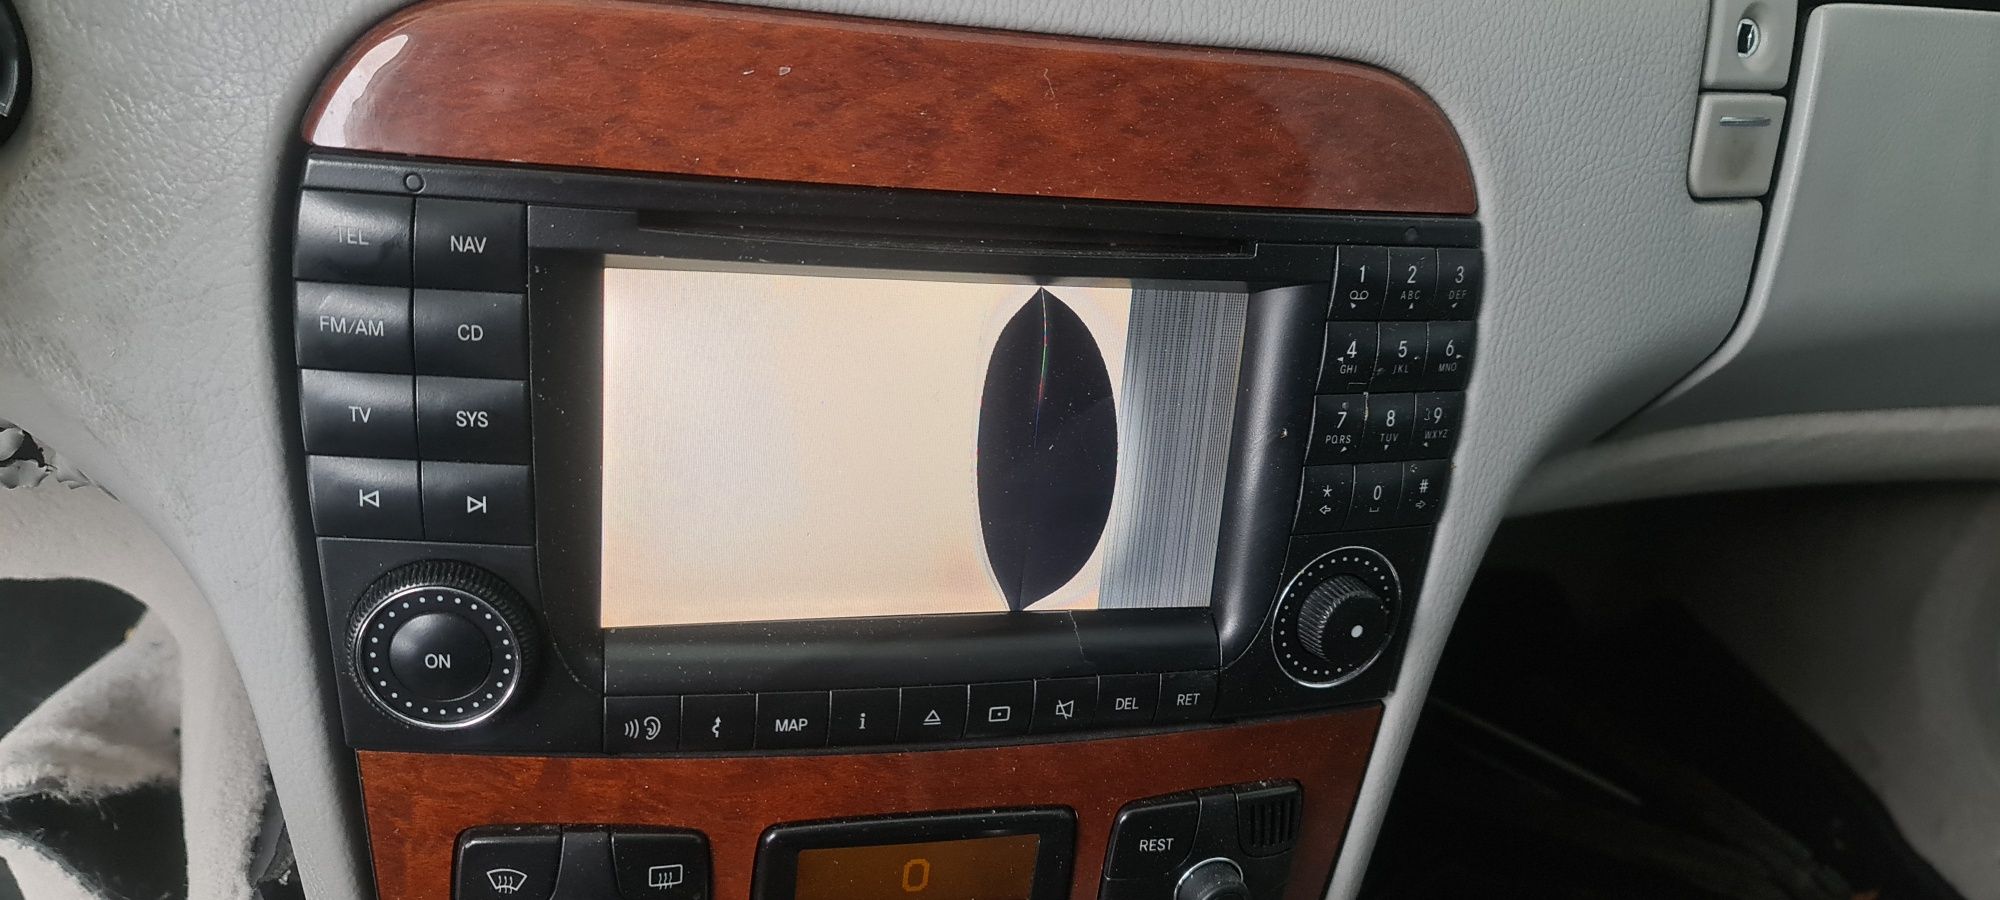 Radio Comand Navi Mercedes W220 W215 LIFT